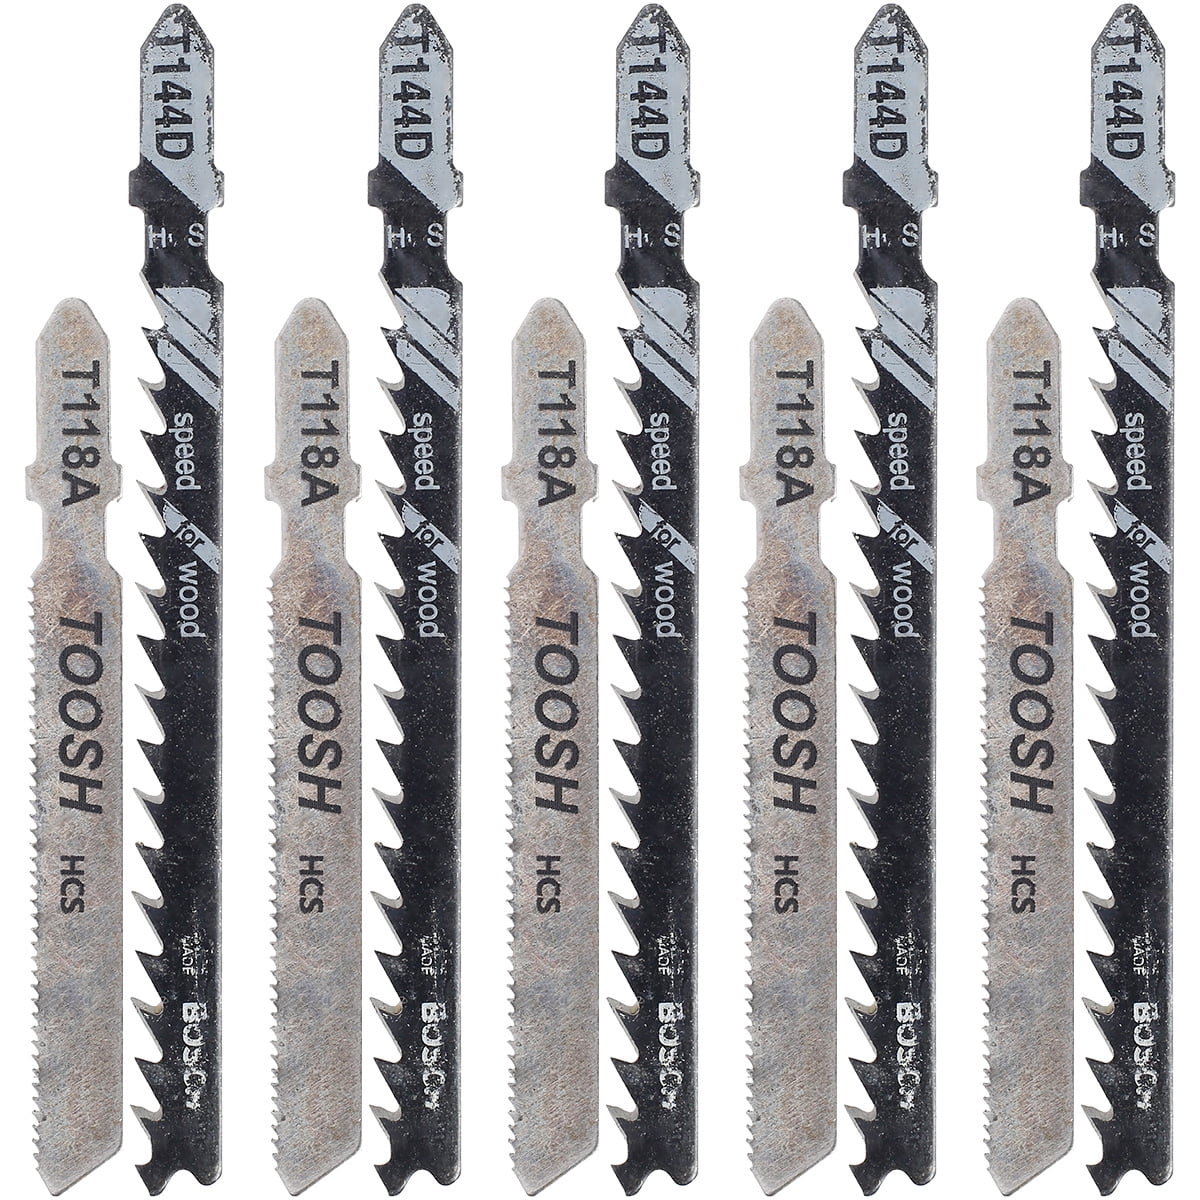 5pcs HCS Jigsaw Blade Speed For Wood Cut T-Shank Jig Saw Blades Fast Cutting Set 